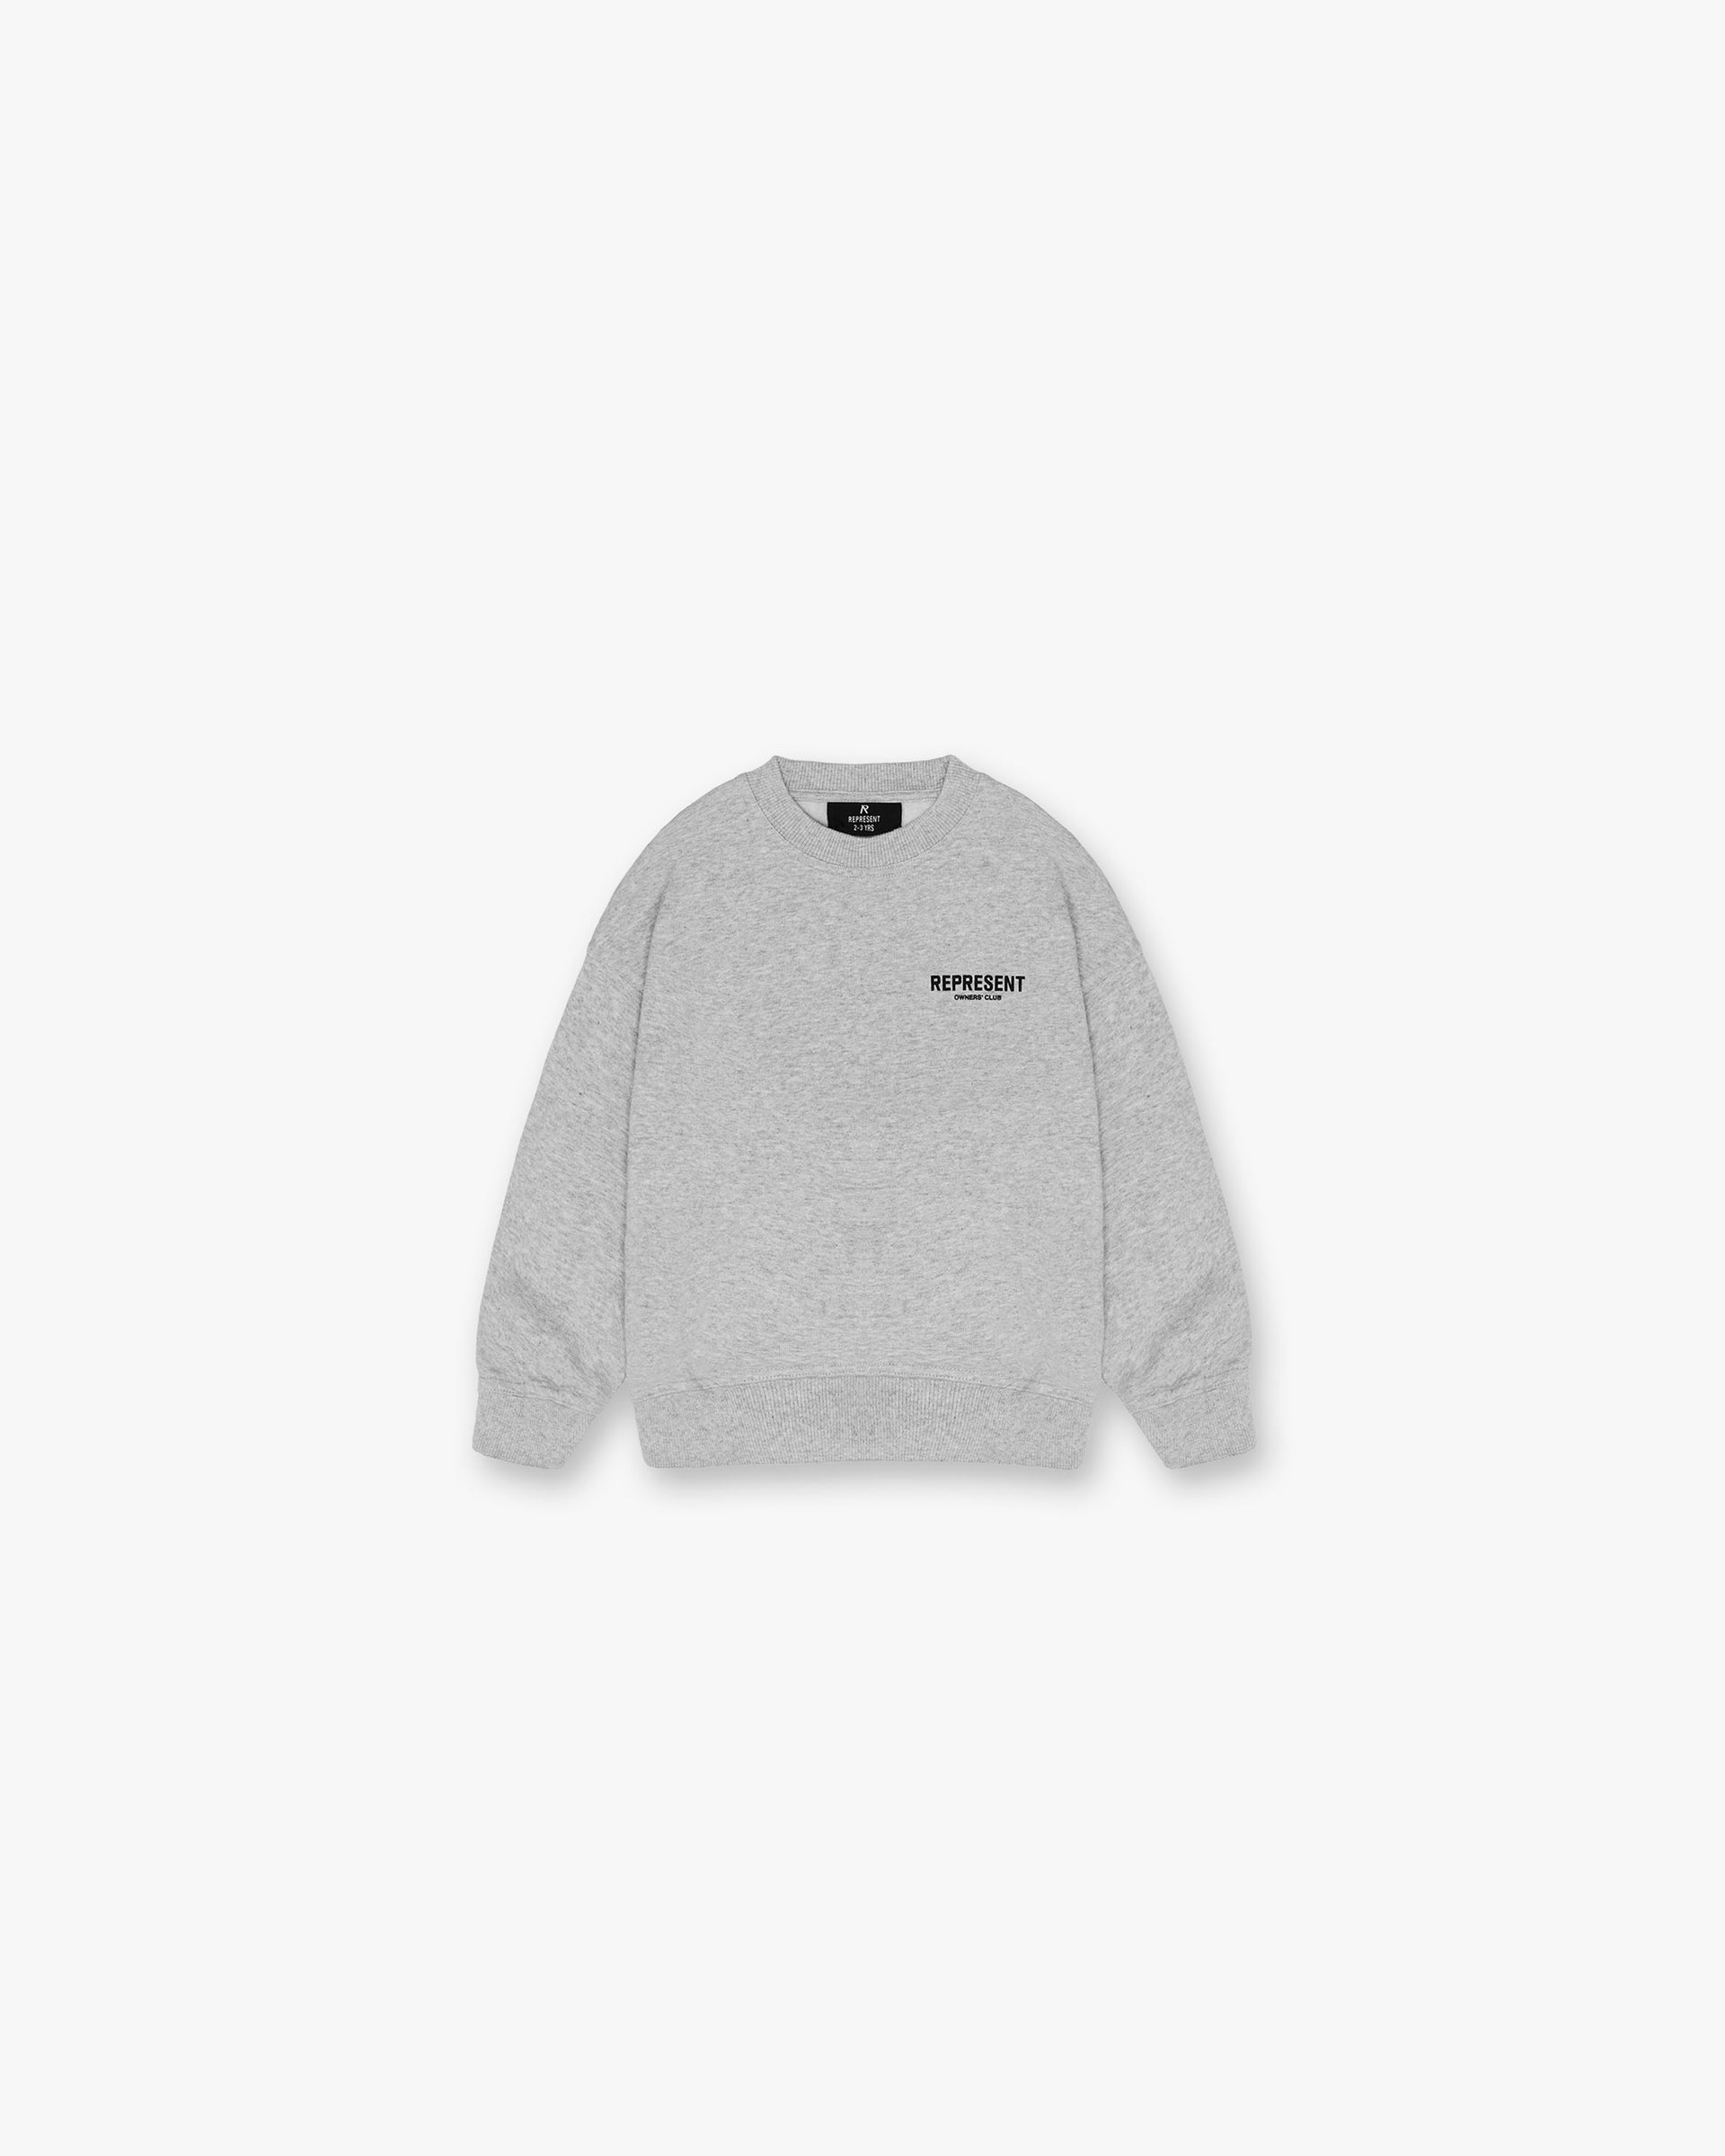 Represent Mini Owners Club Sweater | Ash Grey Sweaters Owners Club | Represent Clo